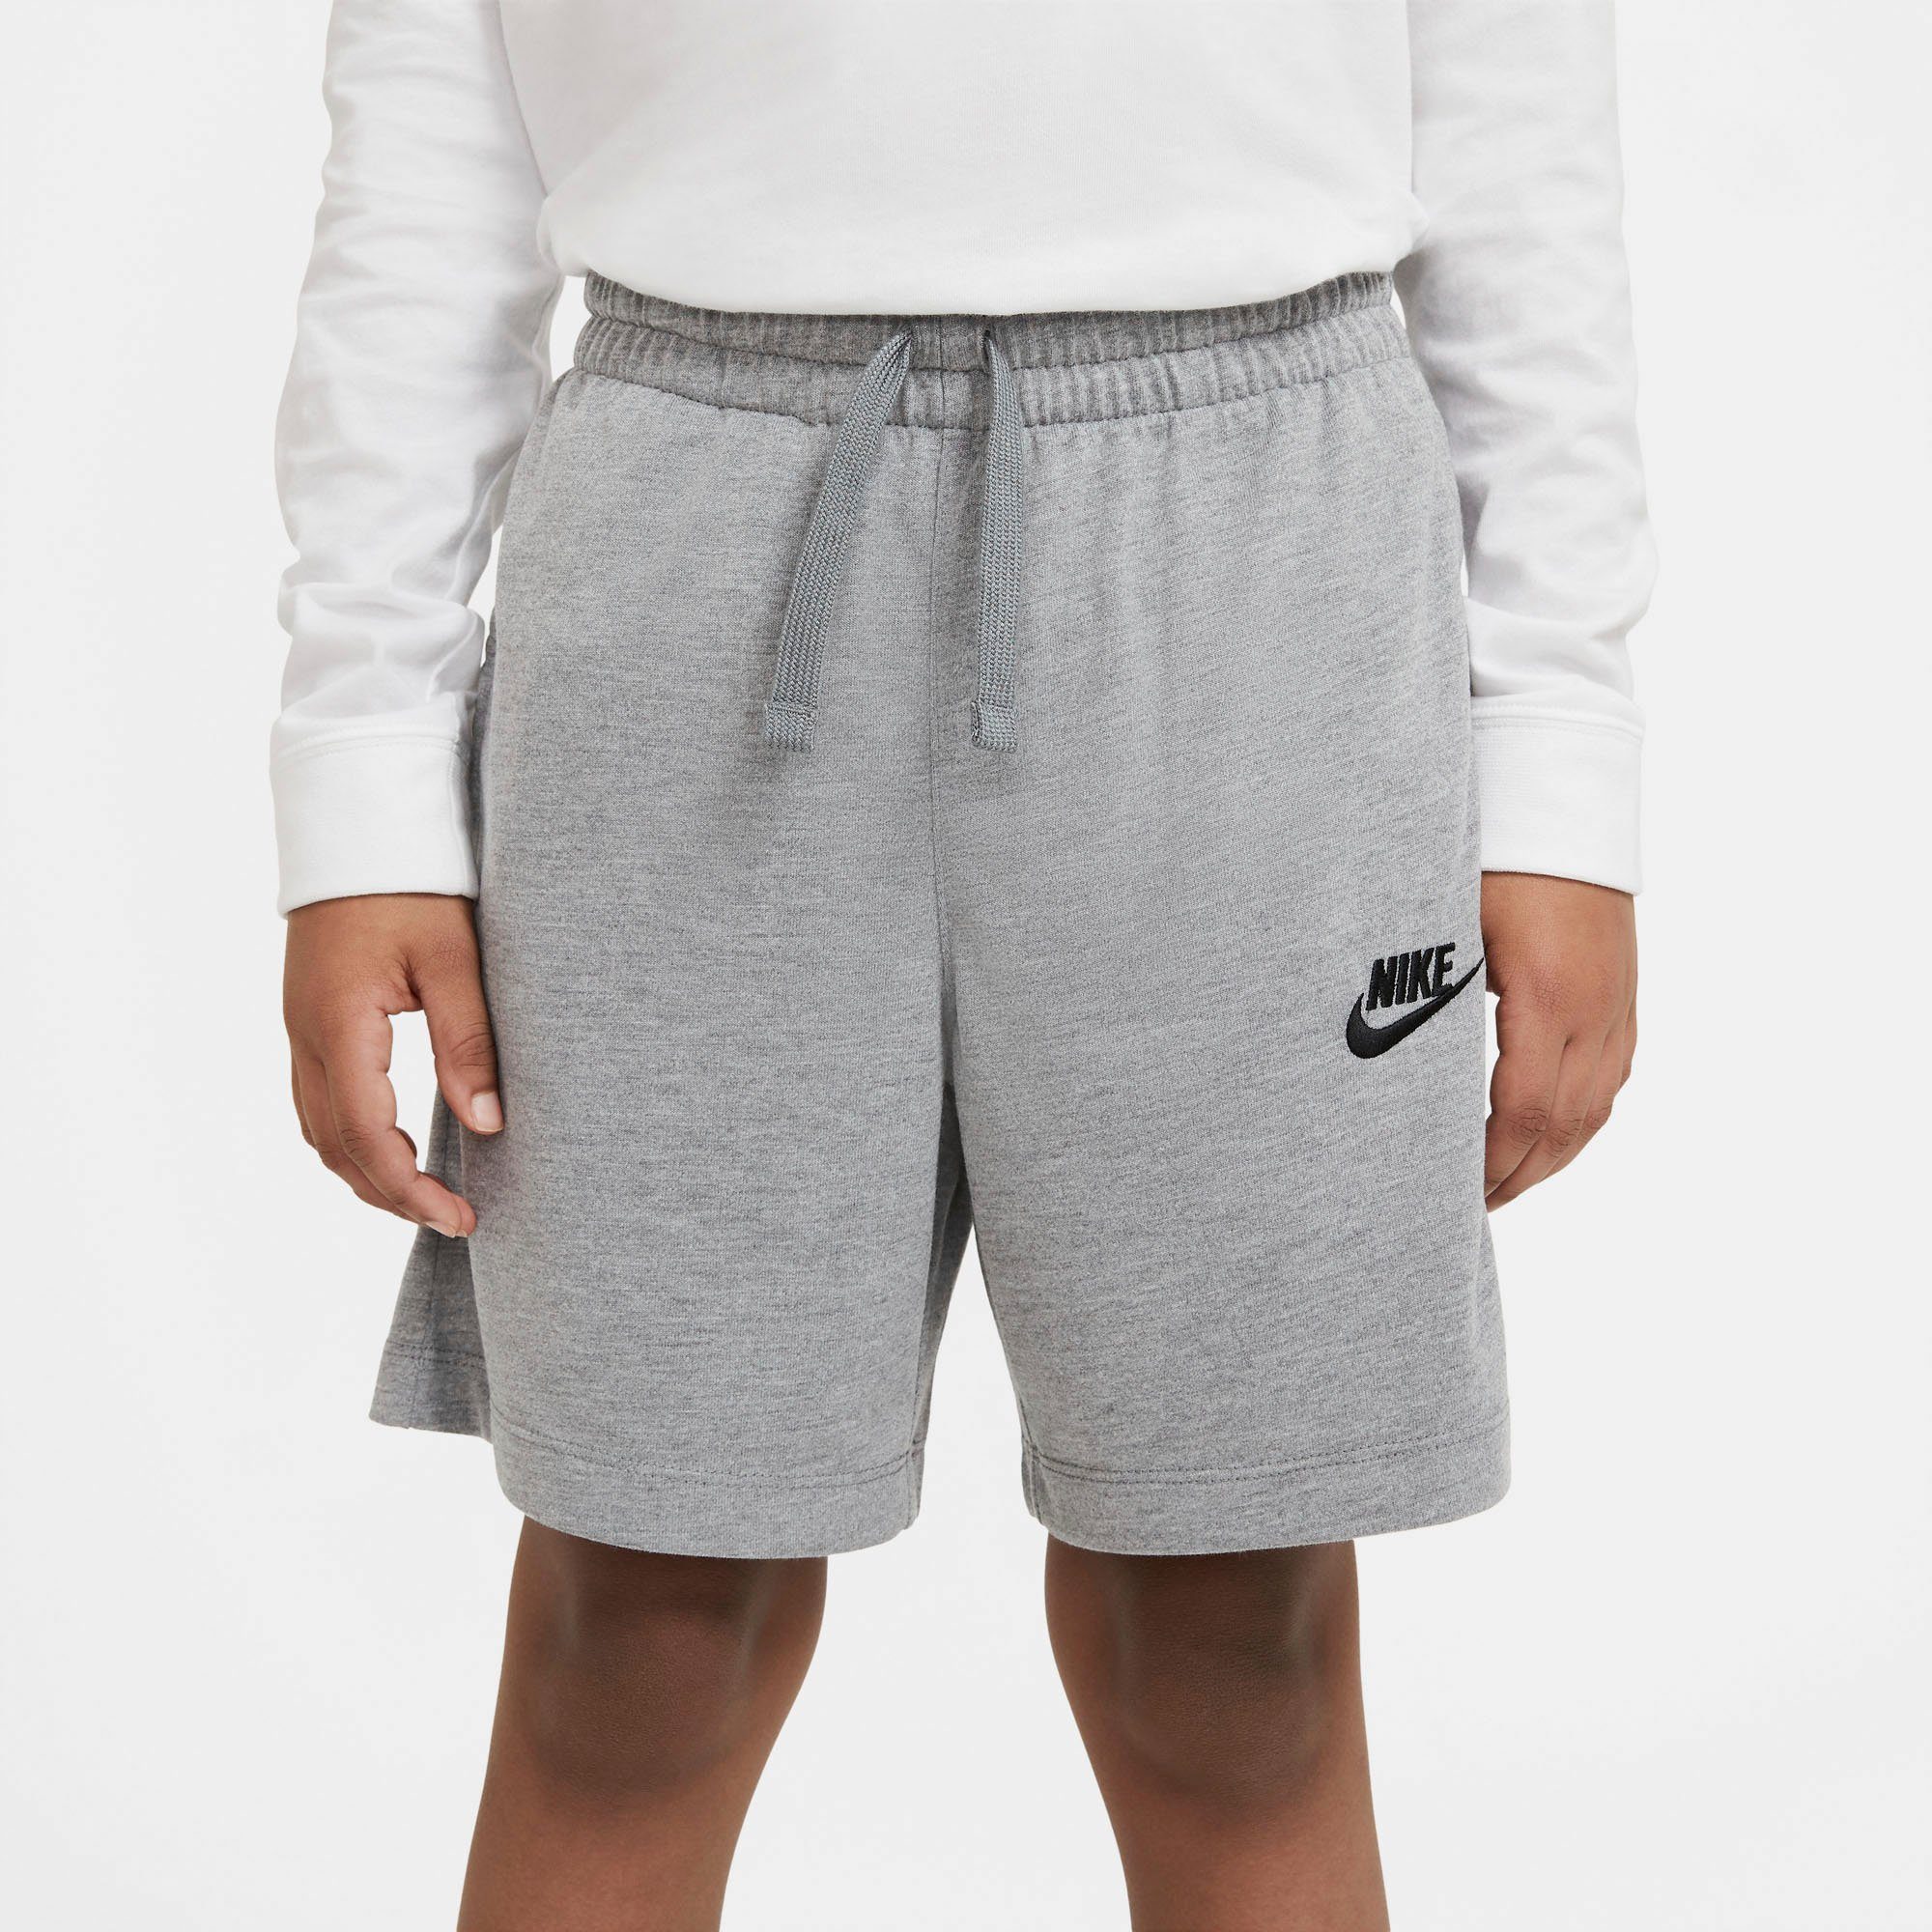 KIDS' JERSEY (BOYS) BIG Shorts SHORTS Nike Sportswear grau